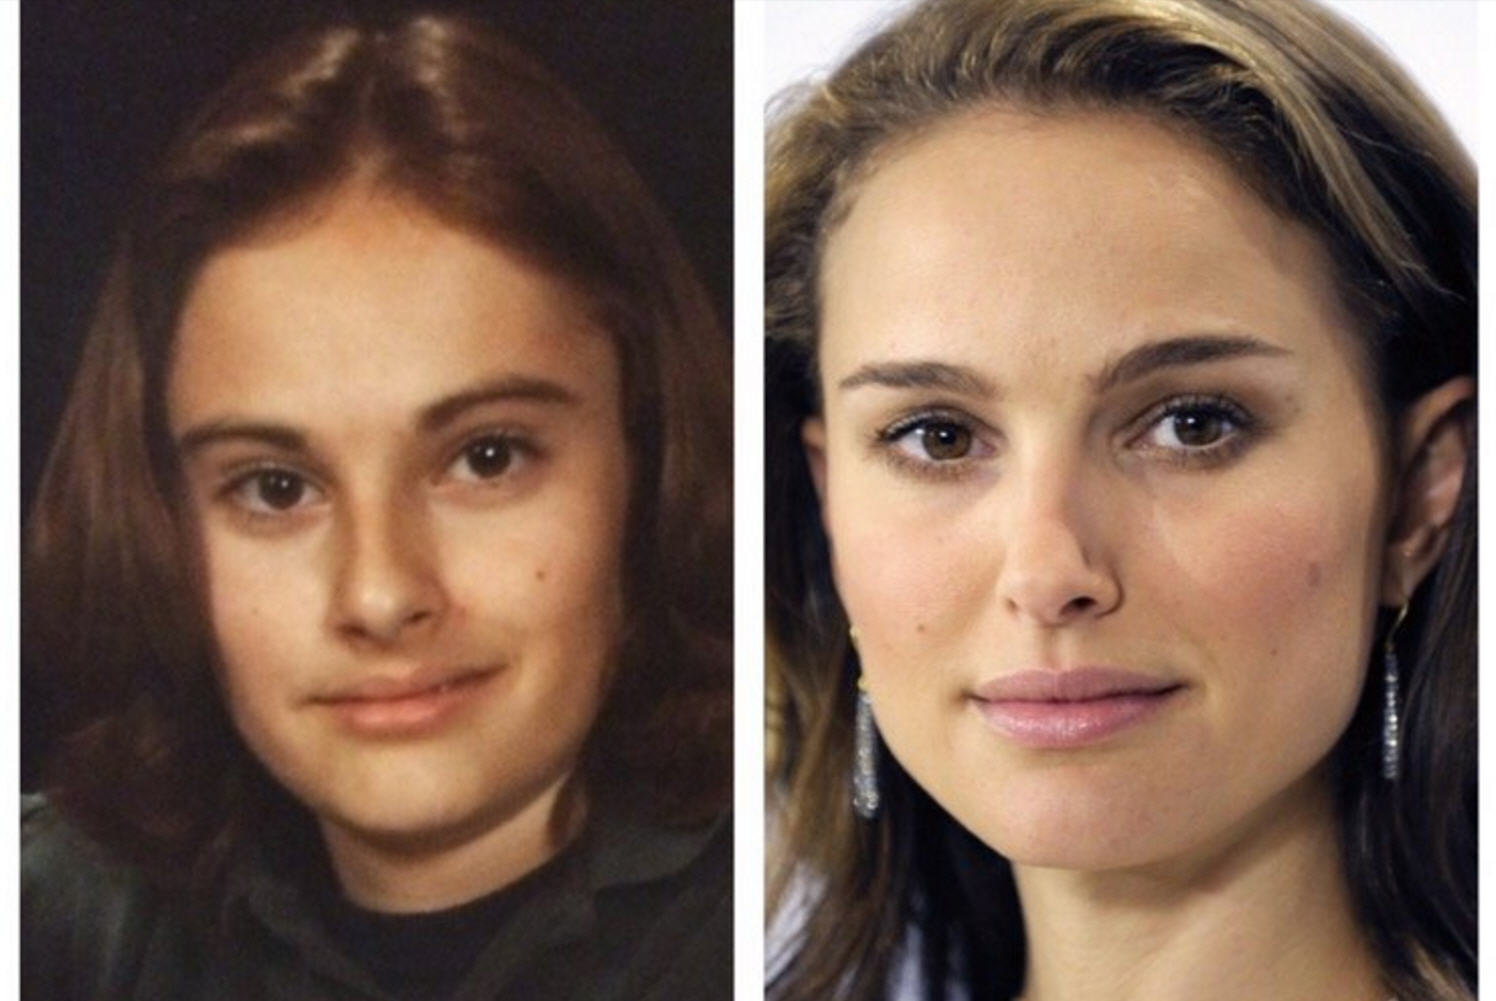 Photo Of 13 Year Old Boy Natalie Portman Look Alike Has The Internet In 0156